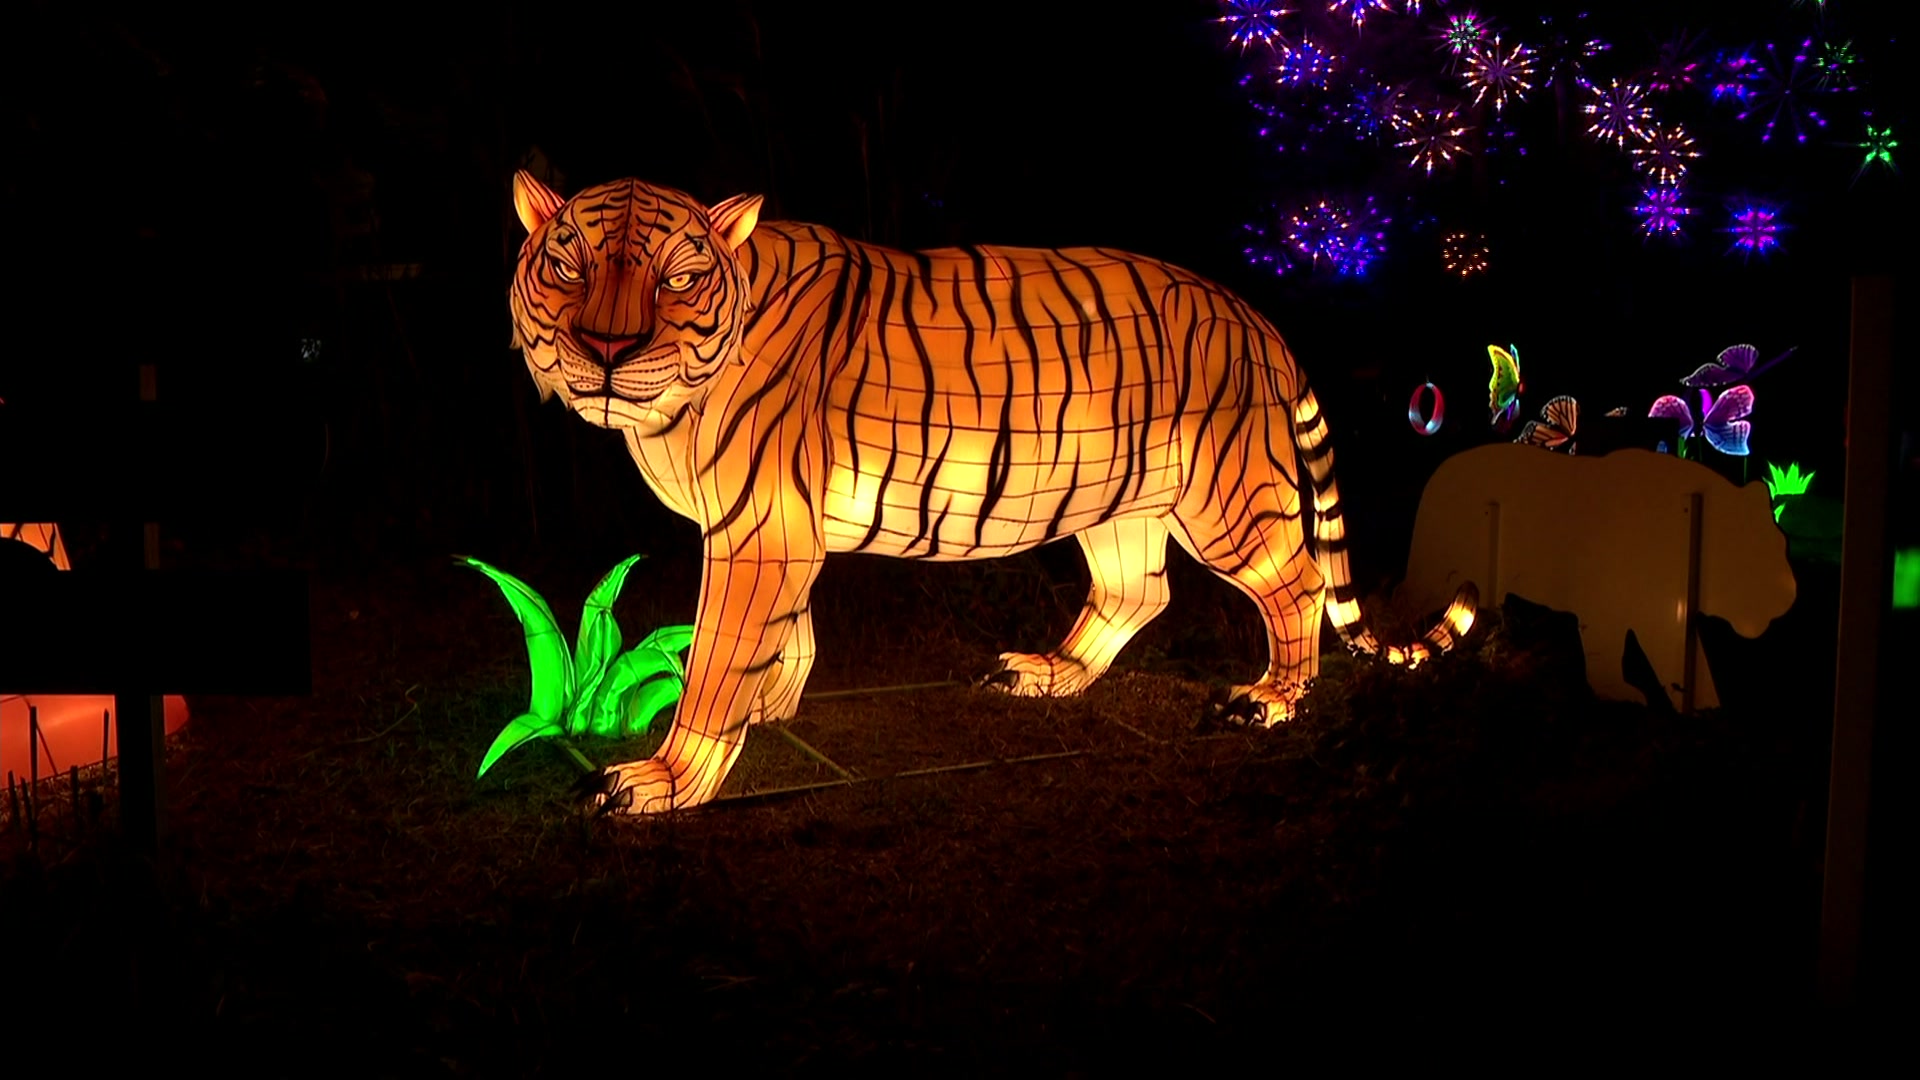 Road Trip Glow Wild Lantern Festival lights up the night at Beardsley Zoo